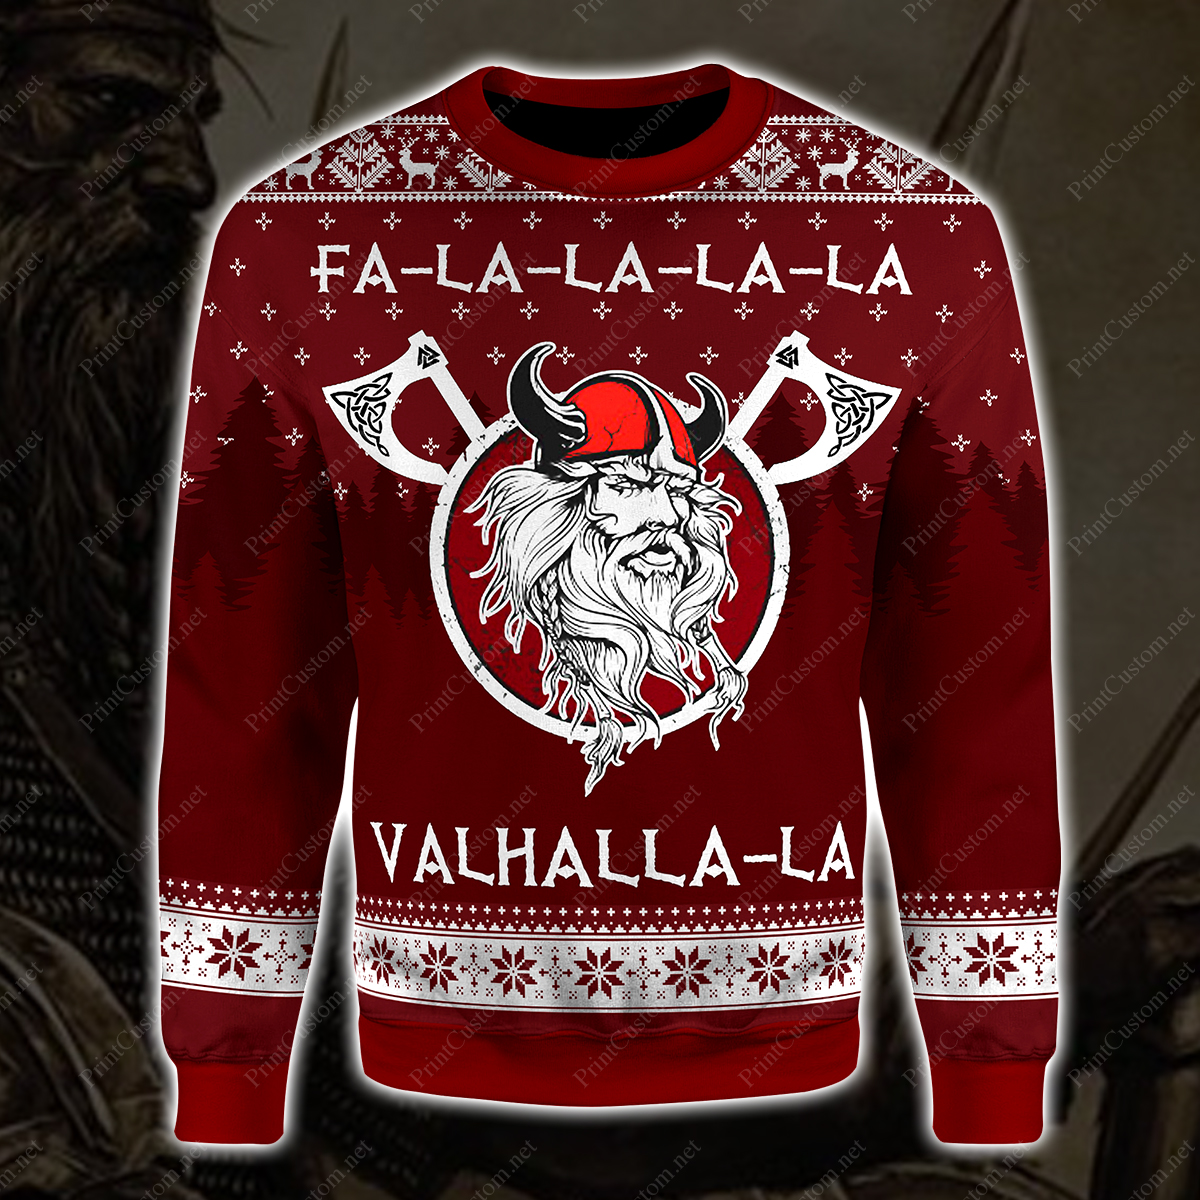 Fa-la-la-la-la valhalla-la viking ugly christmas sweater 2